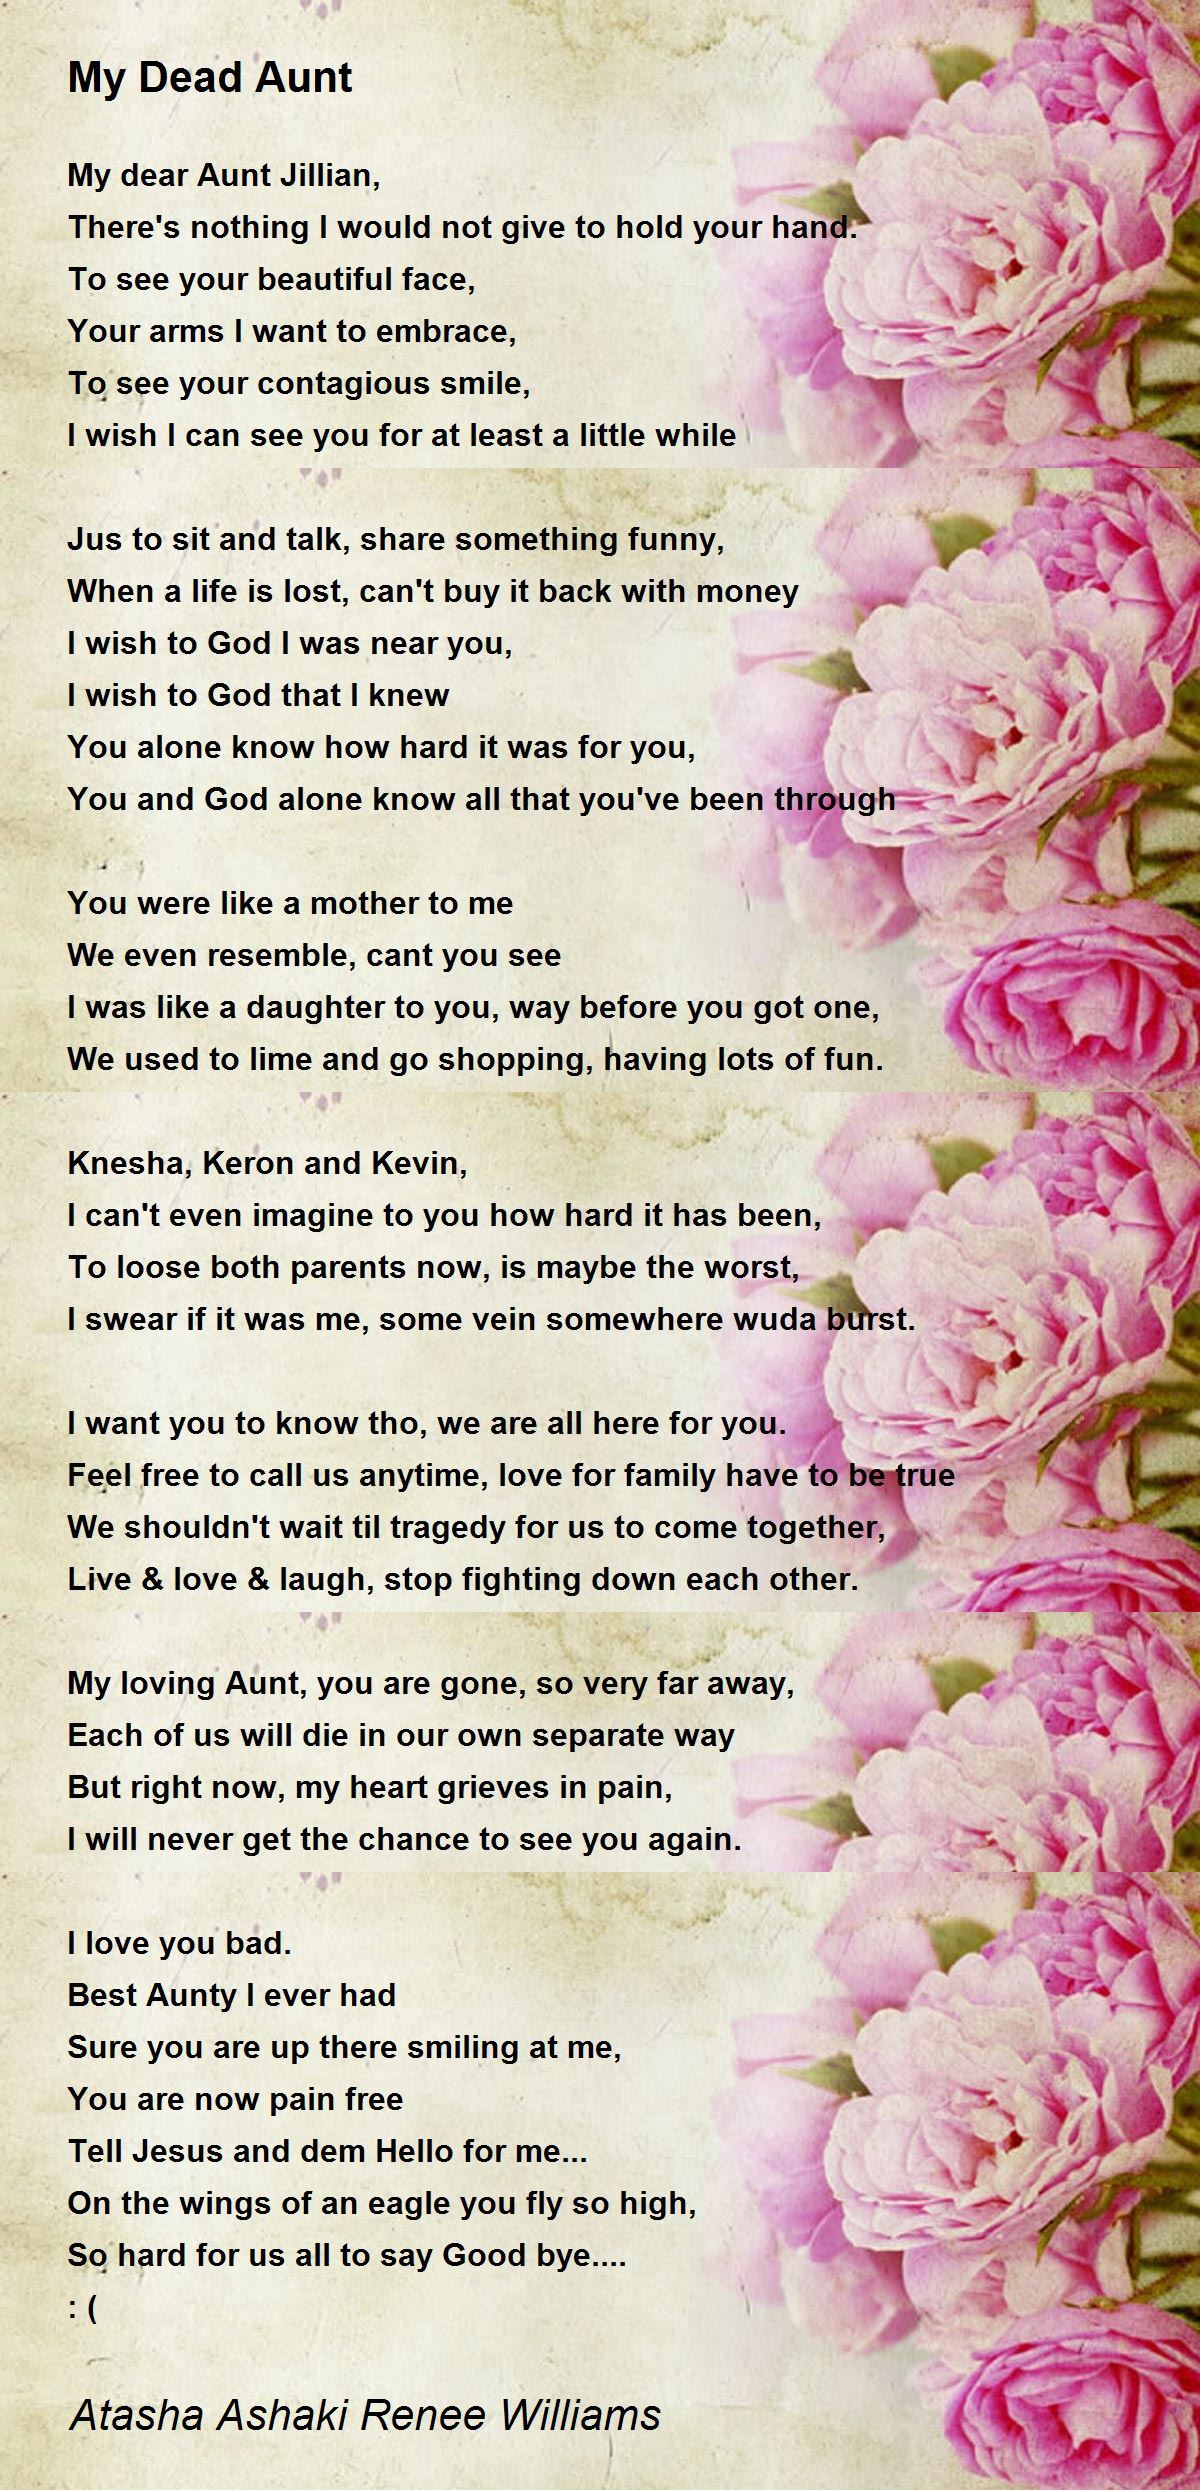 My Dead Aunt by Atasha Ashaki Renee Williams - My Dead Aunt Poem